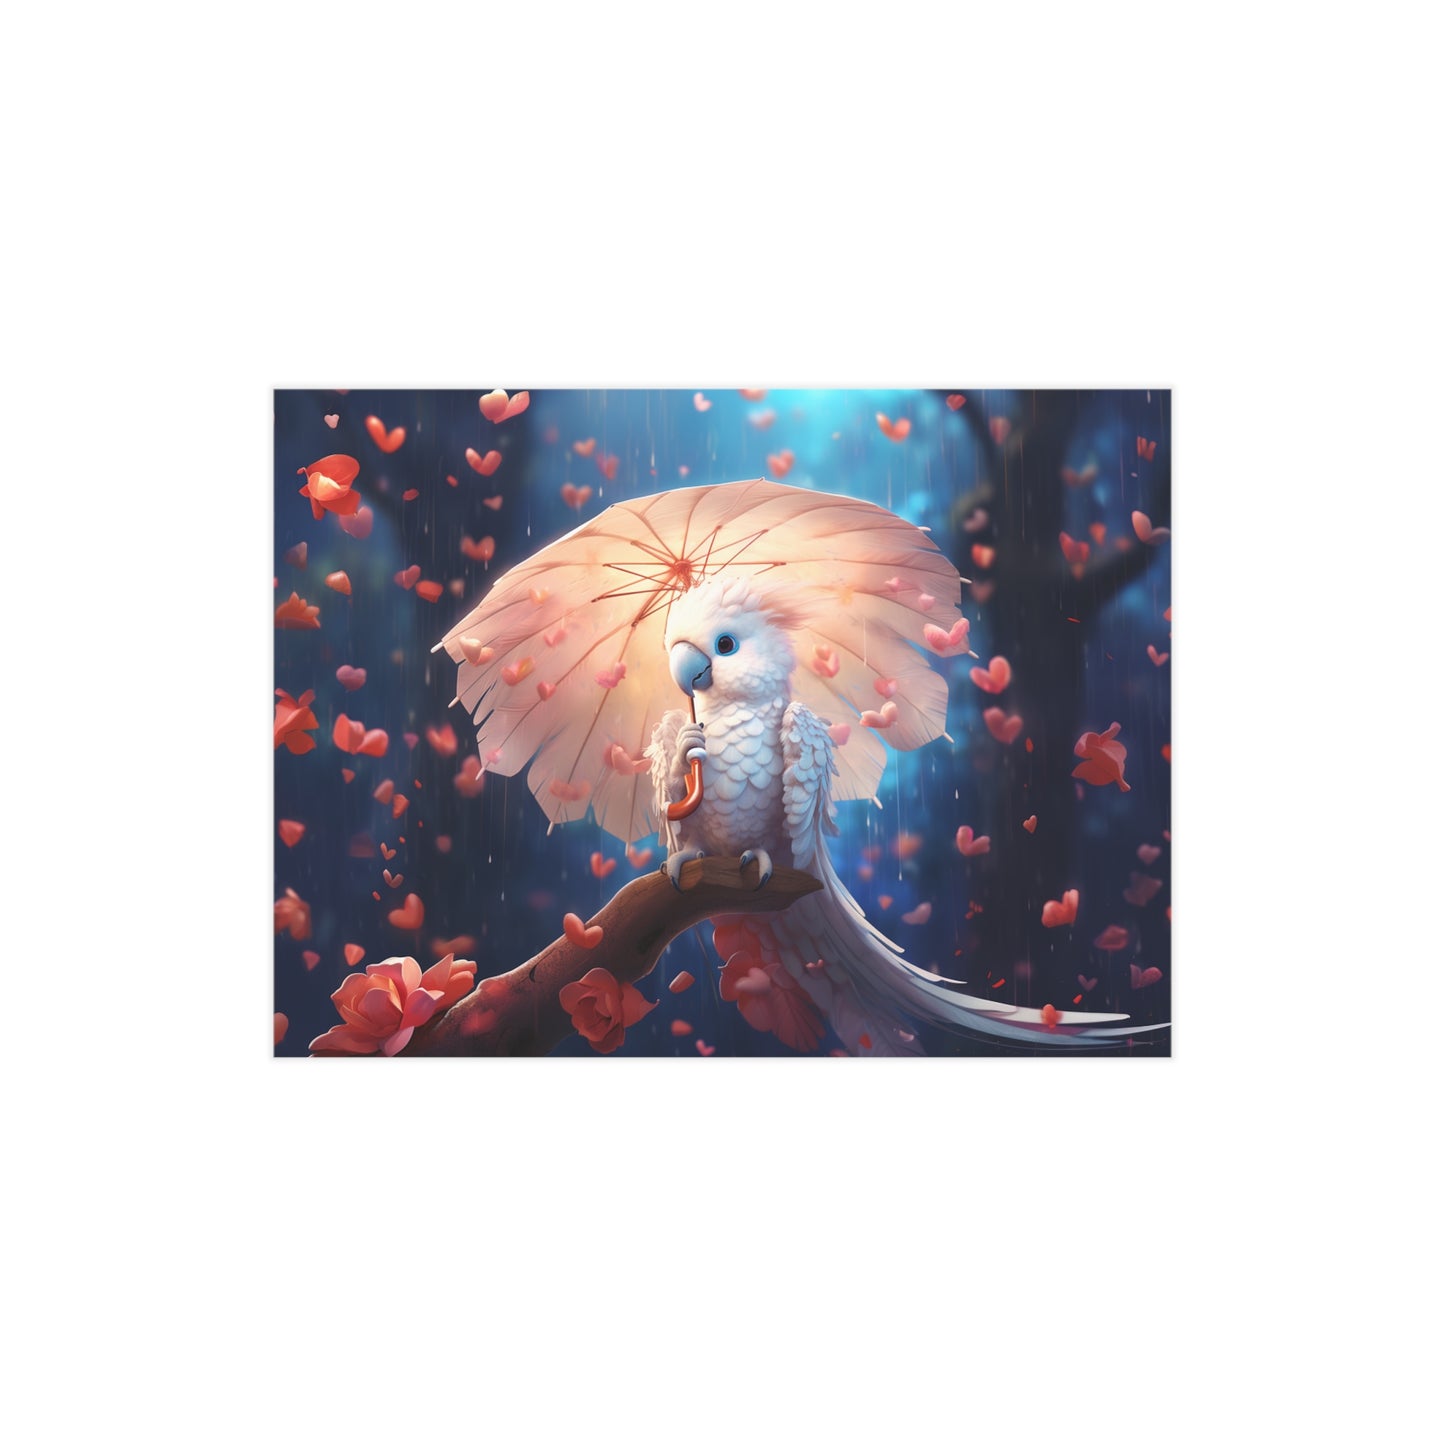 Cockatoo In A Rain of Love